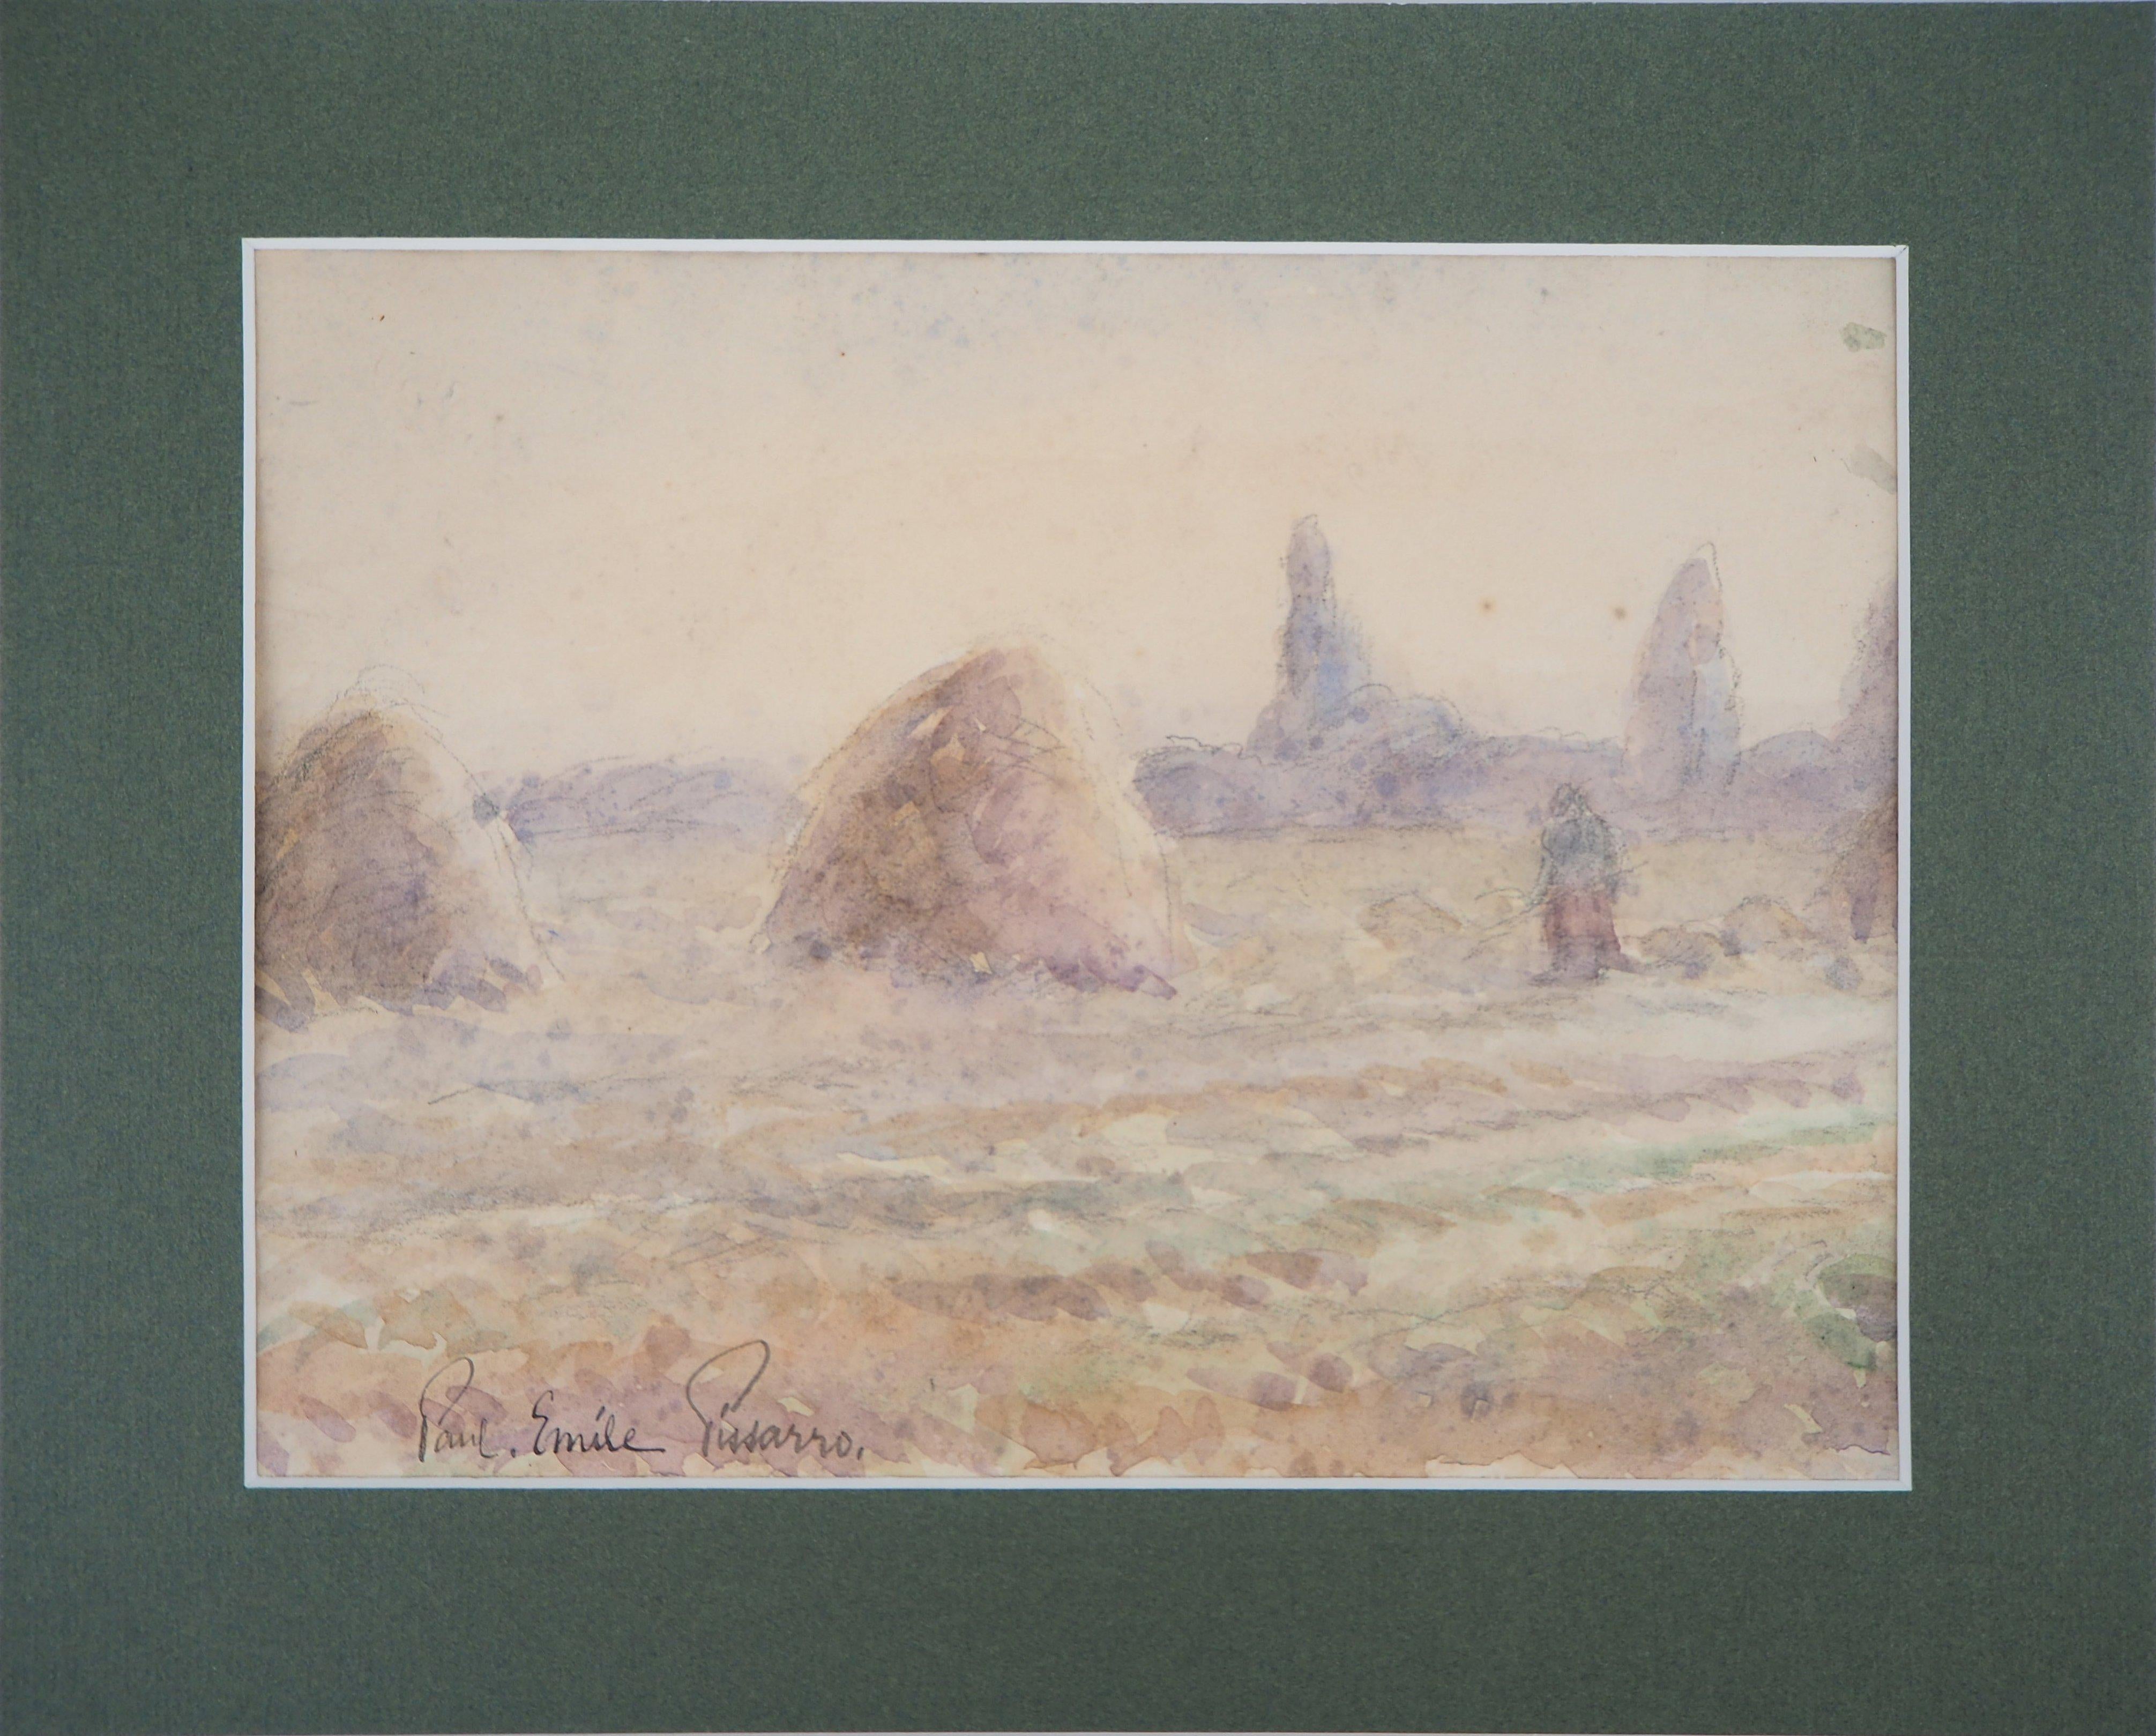 Paul Emile Pissarro Landscape Art - Tribute to Monet : Haystacks and Harvest - Original watercolor painting - Signed